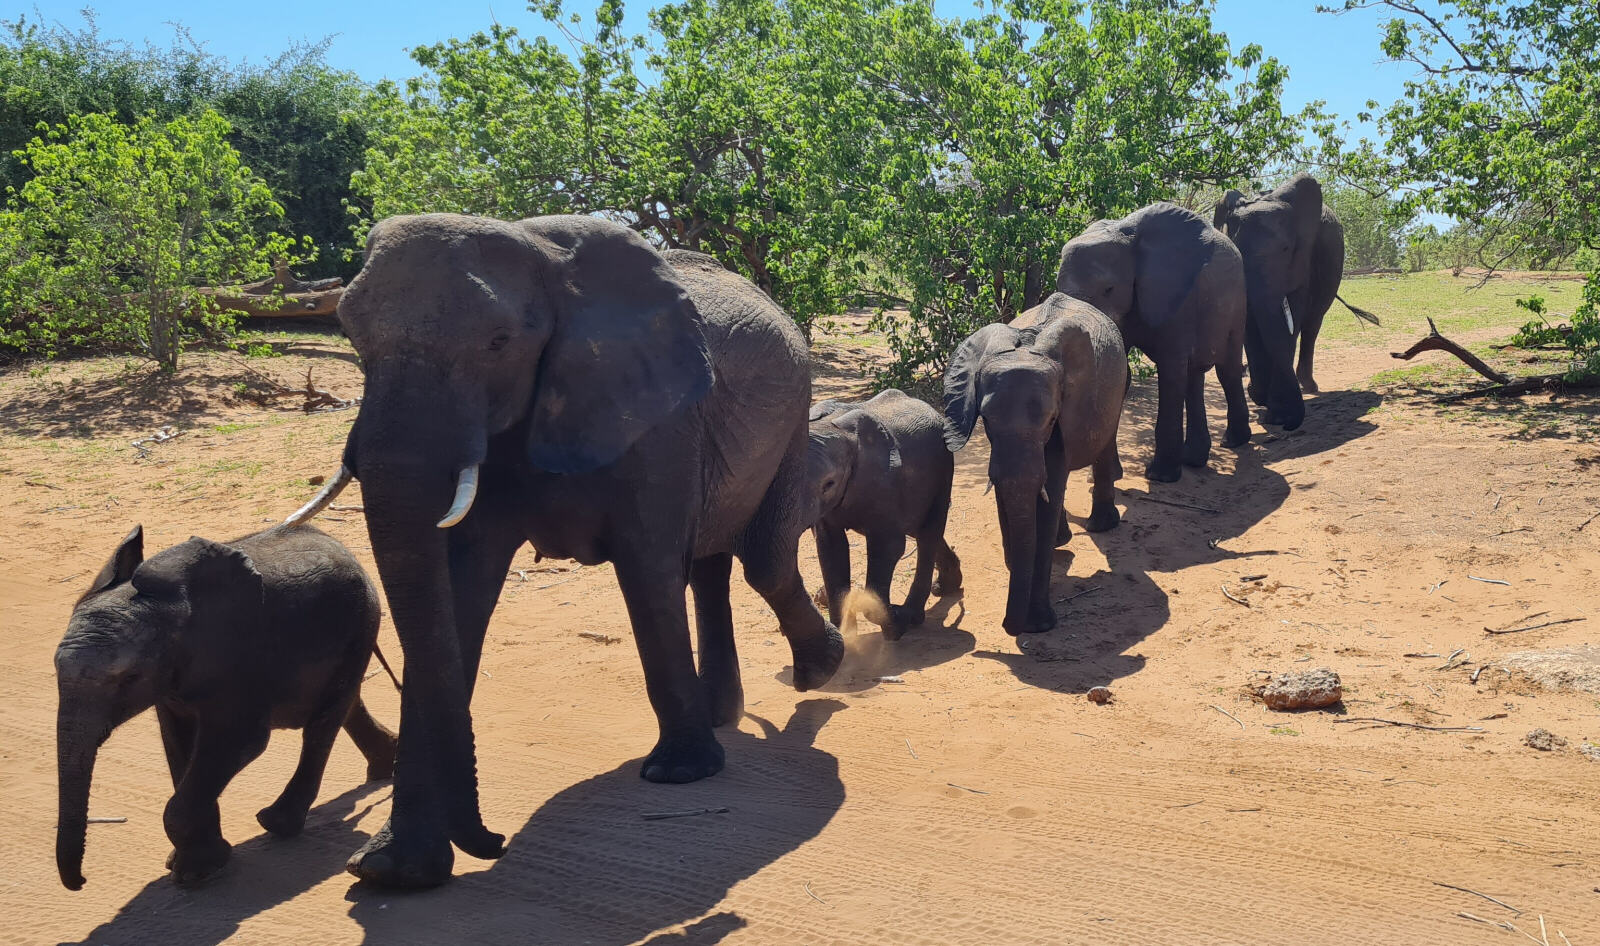 Elephants in Chobe national park, Botswana